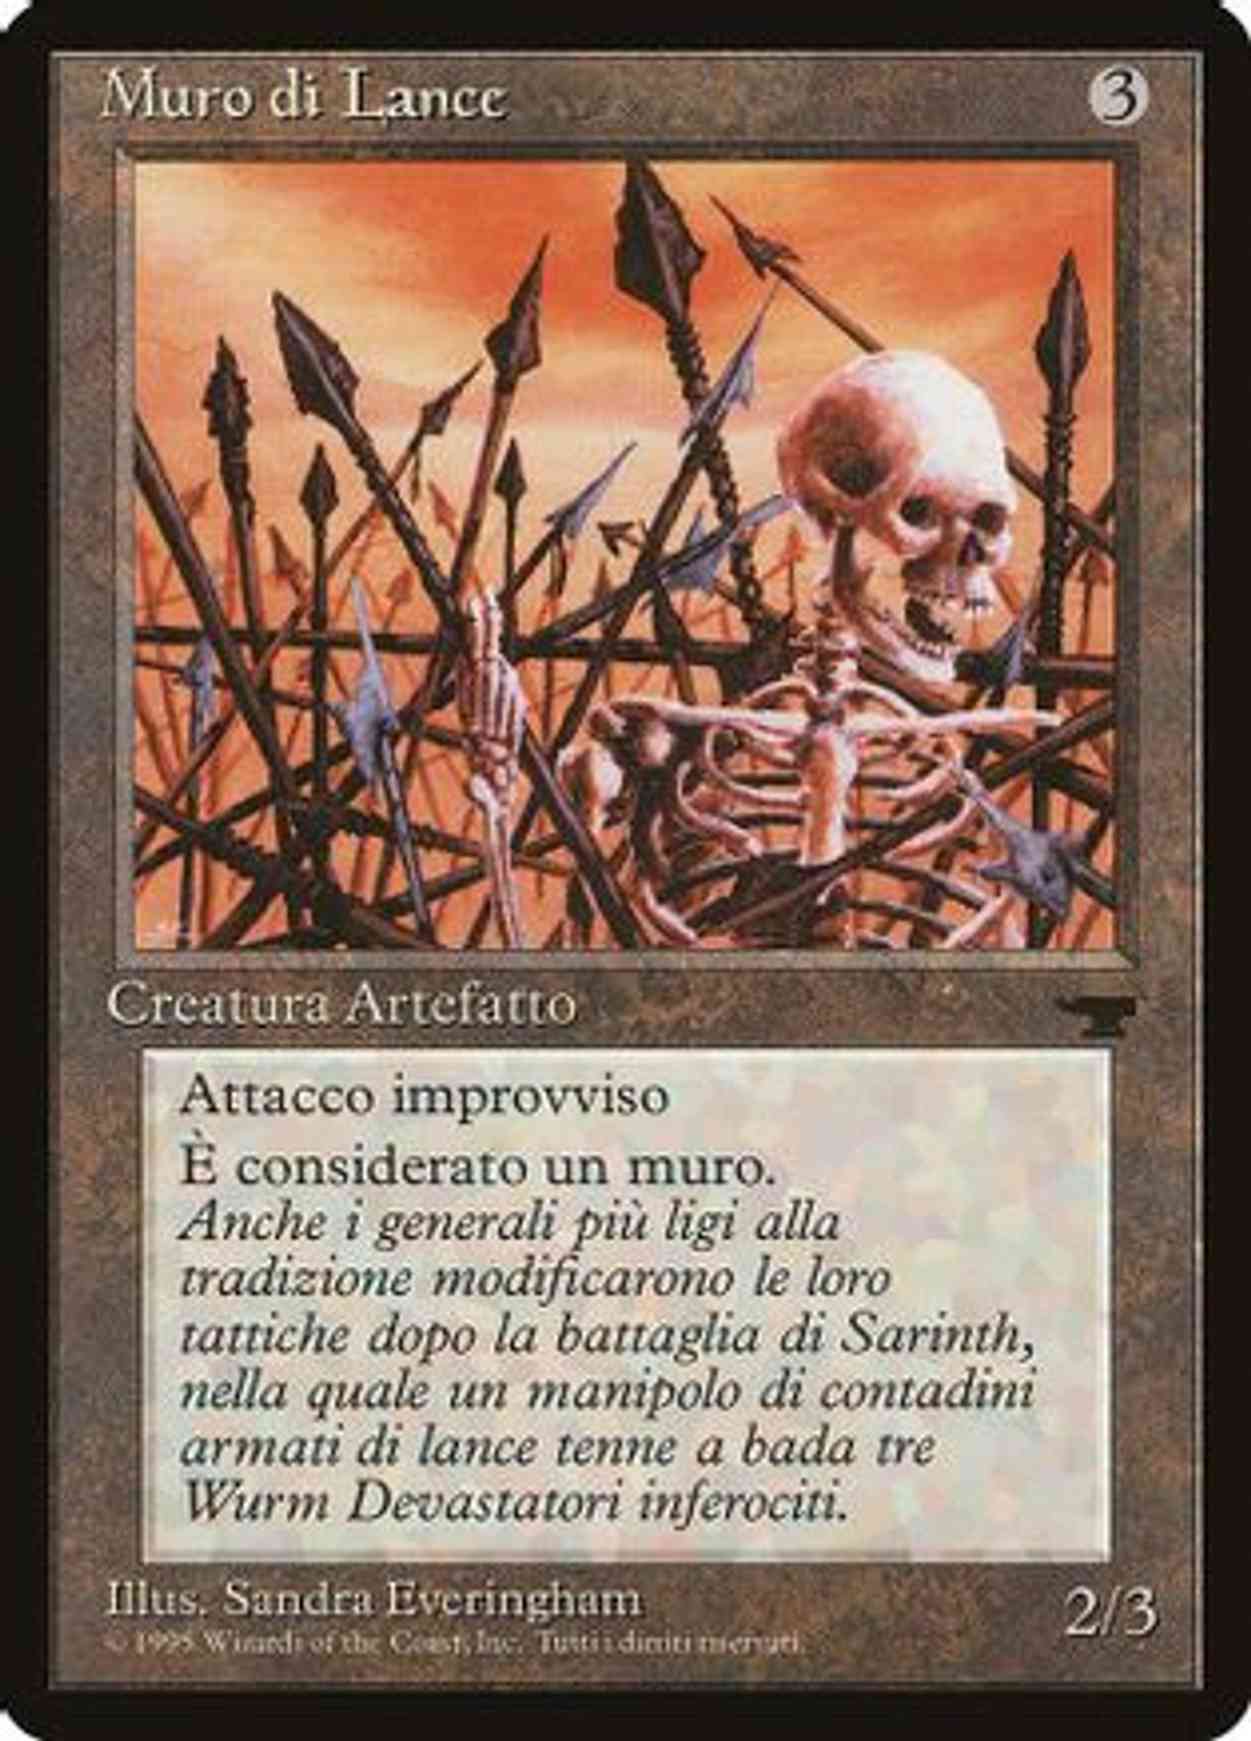 Wall of Spears (Italian) - "Muro di Lance" magic card front